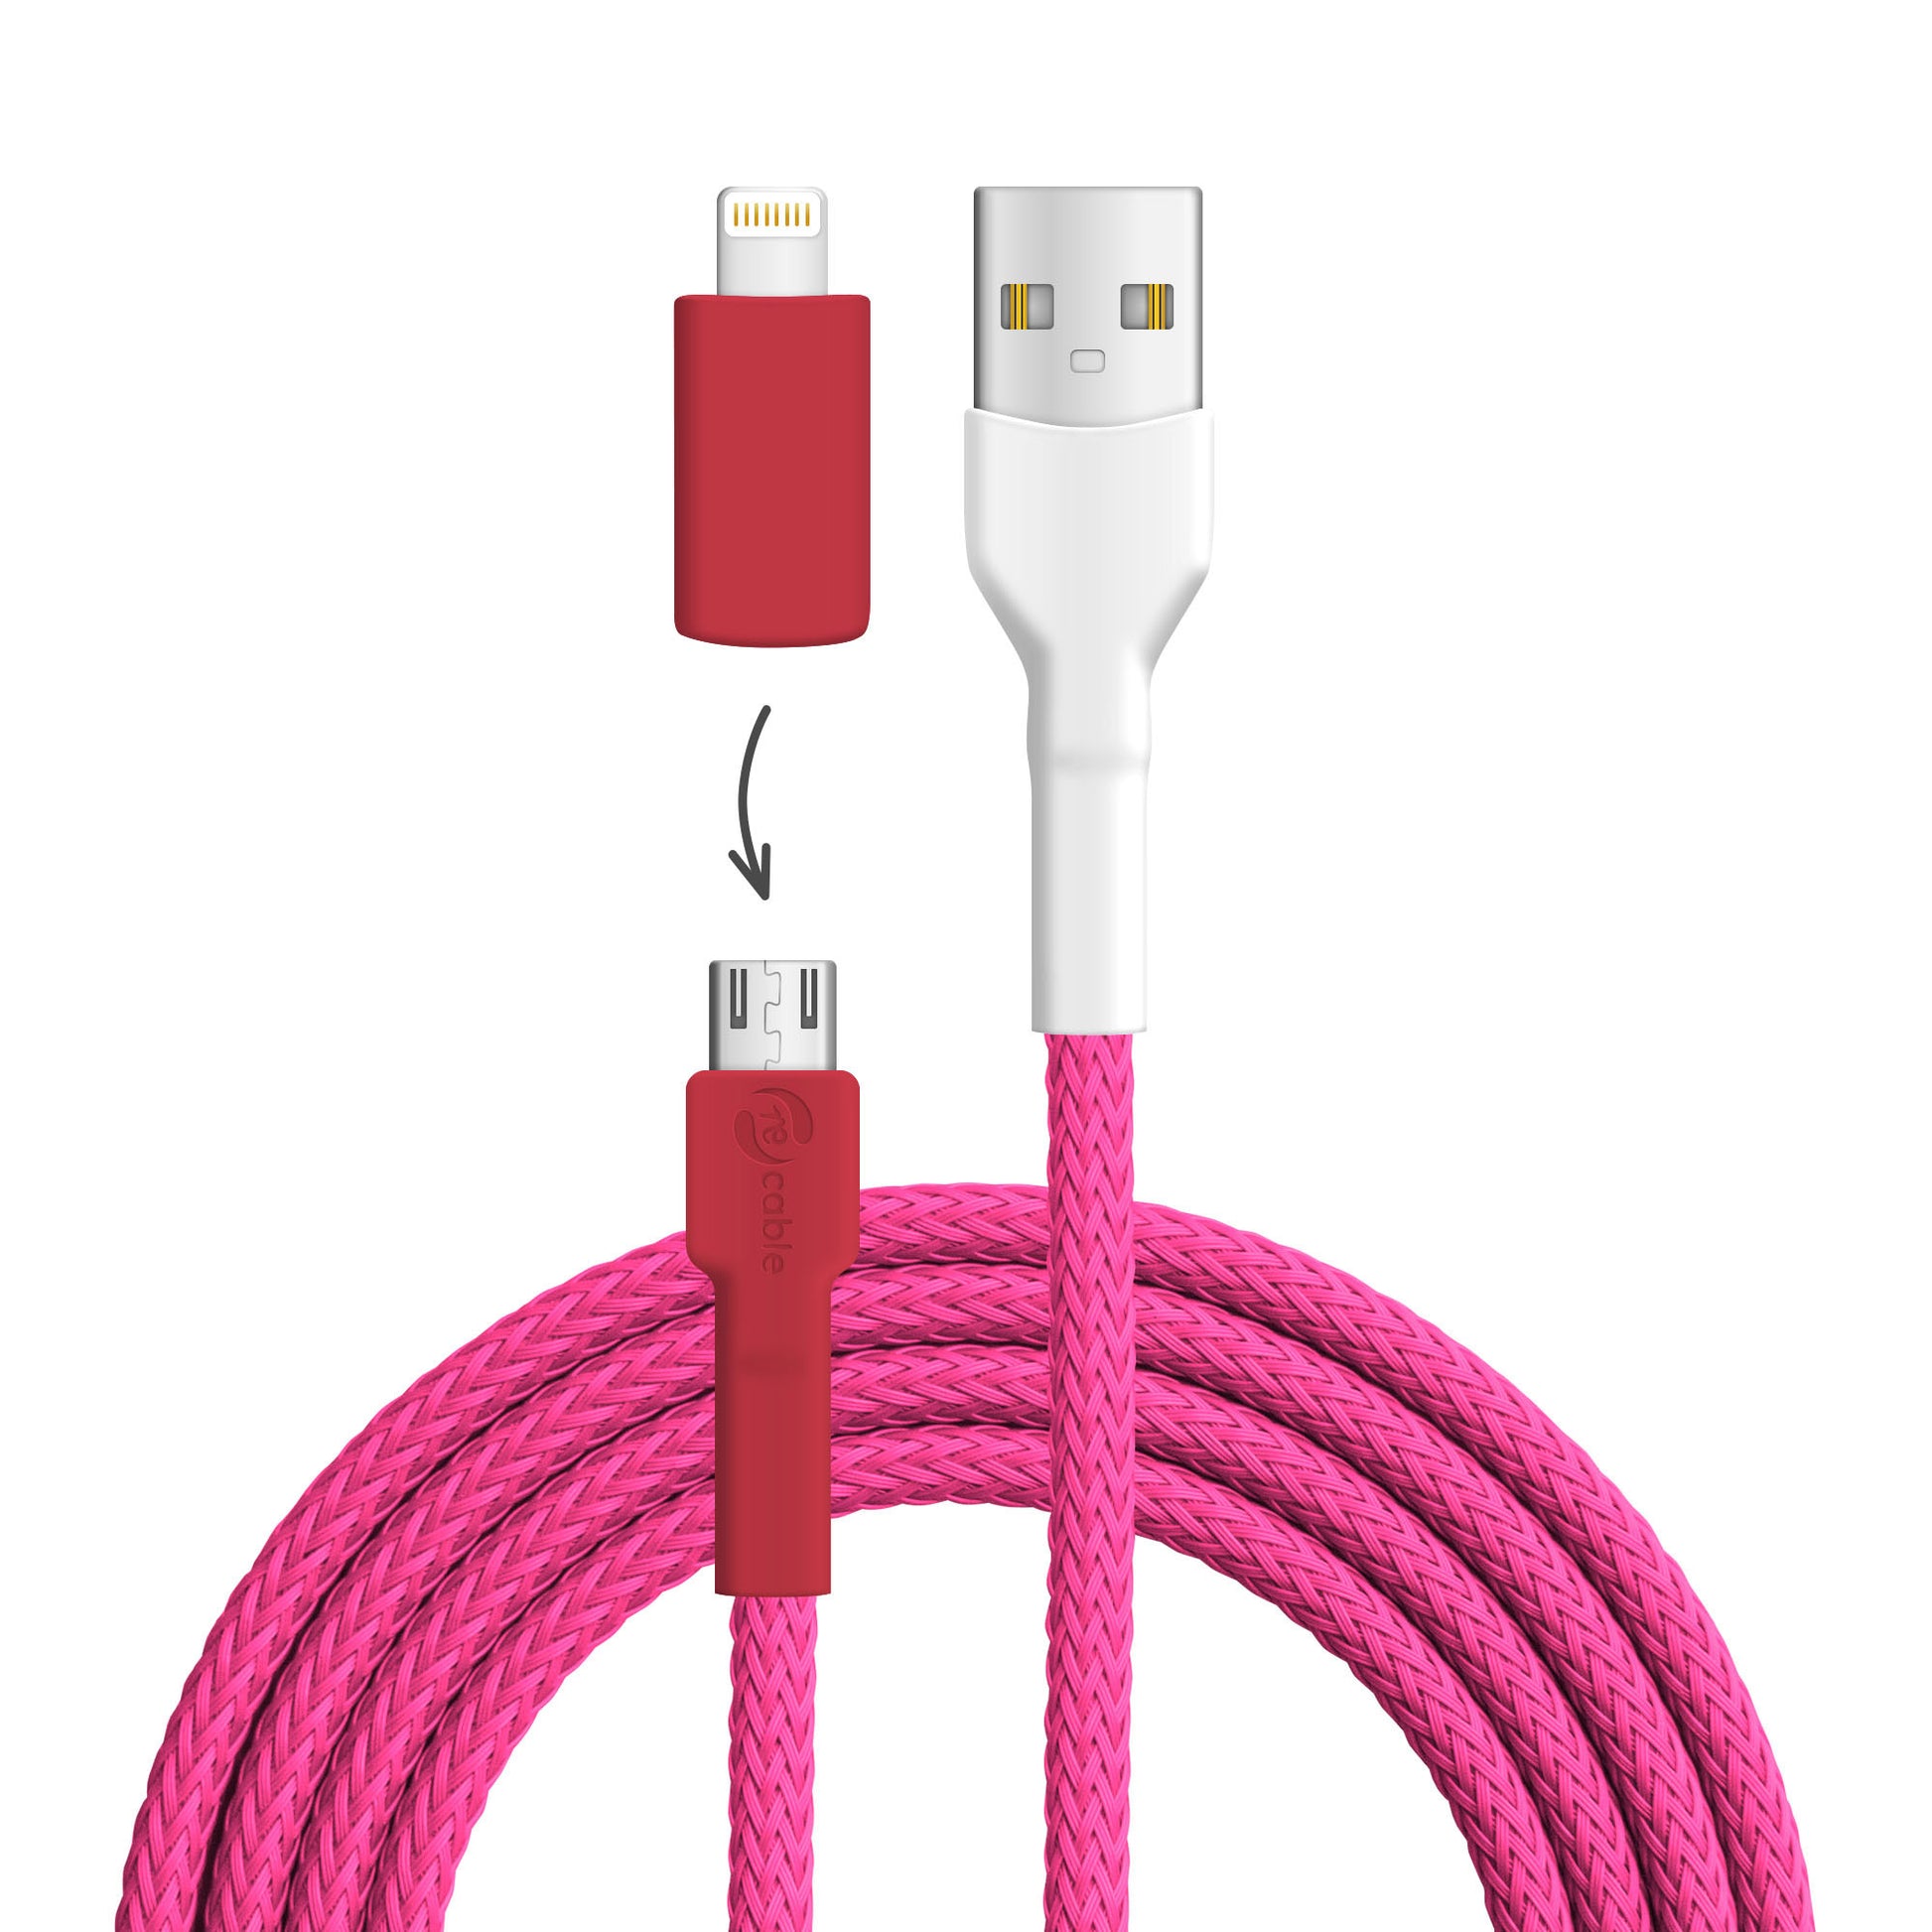 USB-Kabel, Design: Kuba­flamingo, Anschlüsse: USB A auf Micro-USB mit Lightning Adapter (nicht verbunden)